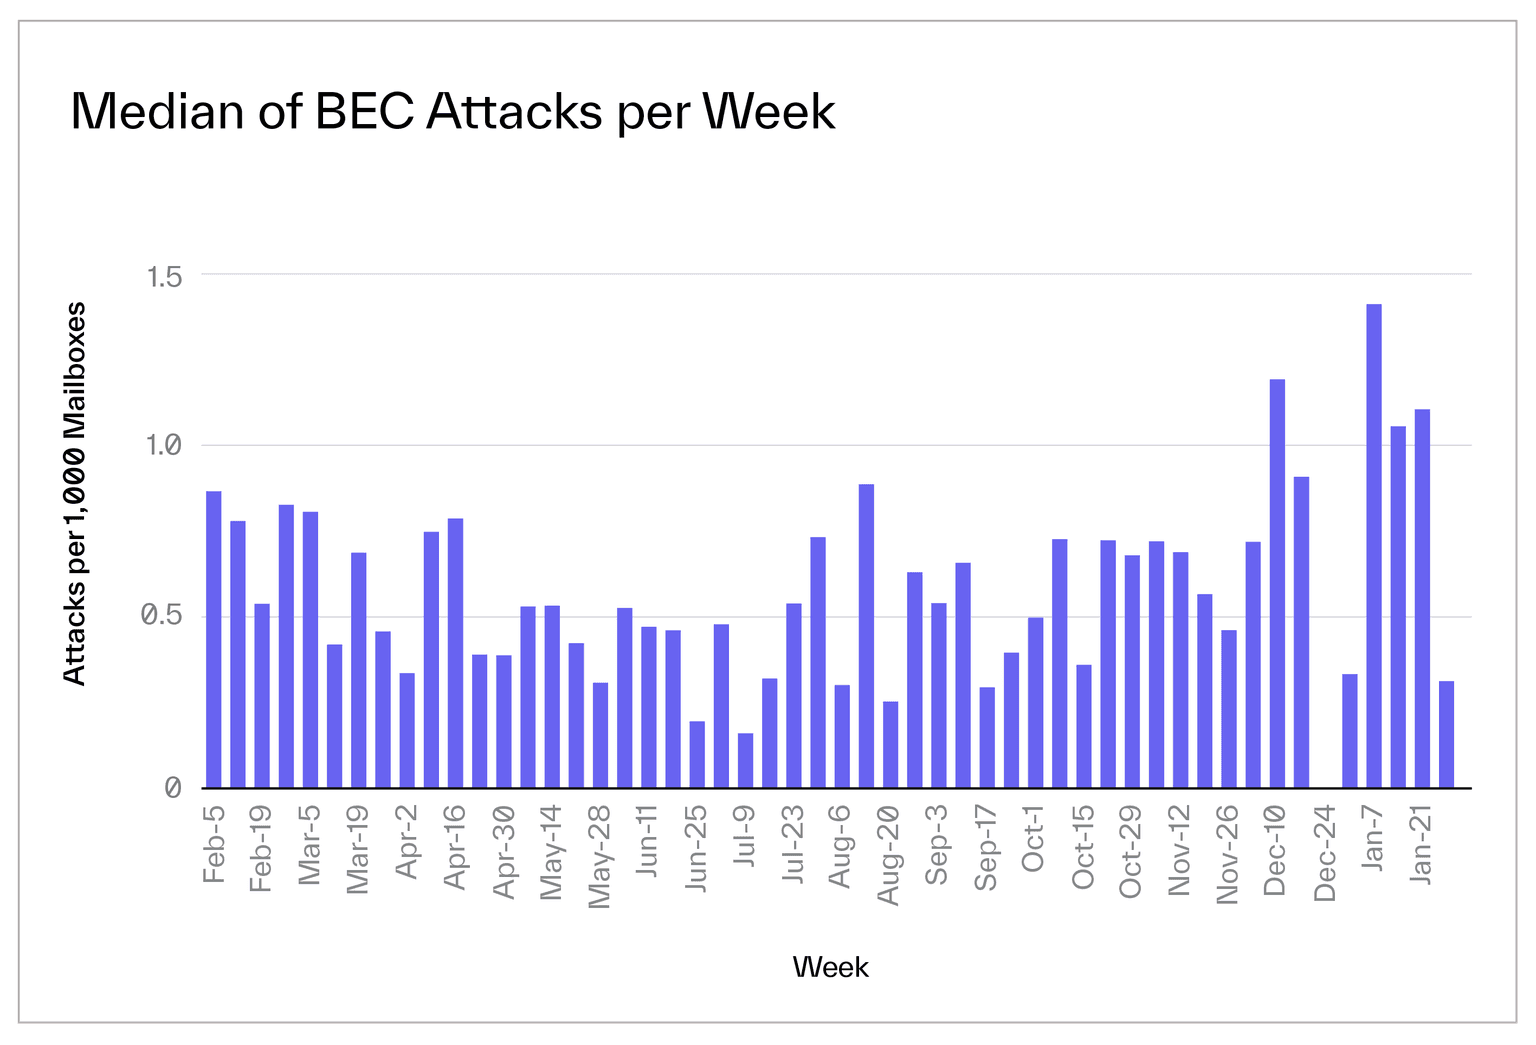 Energy Infrastructure Data Blog Median of BEC Attacks per Week